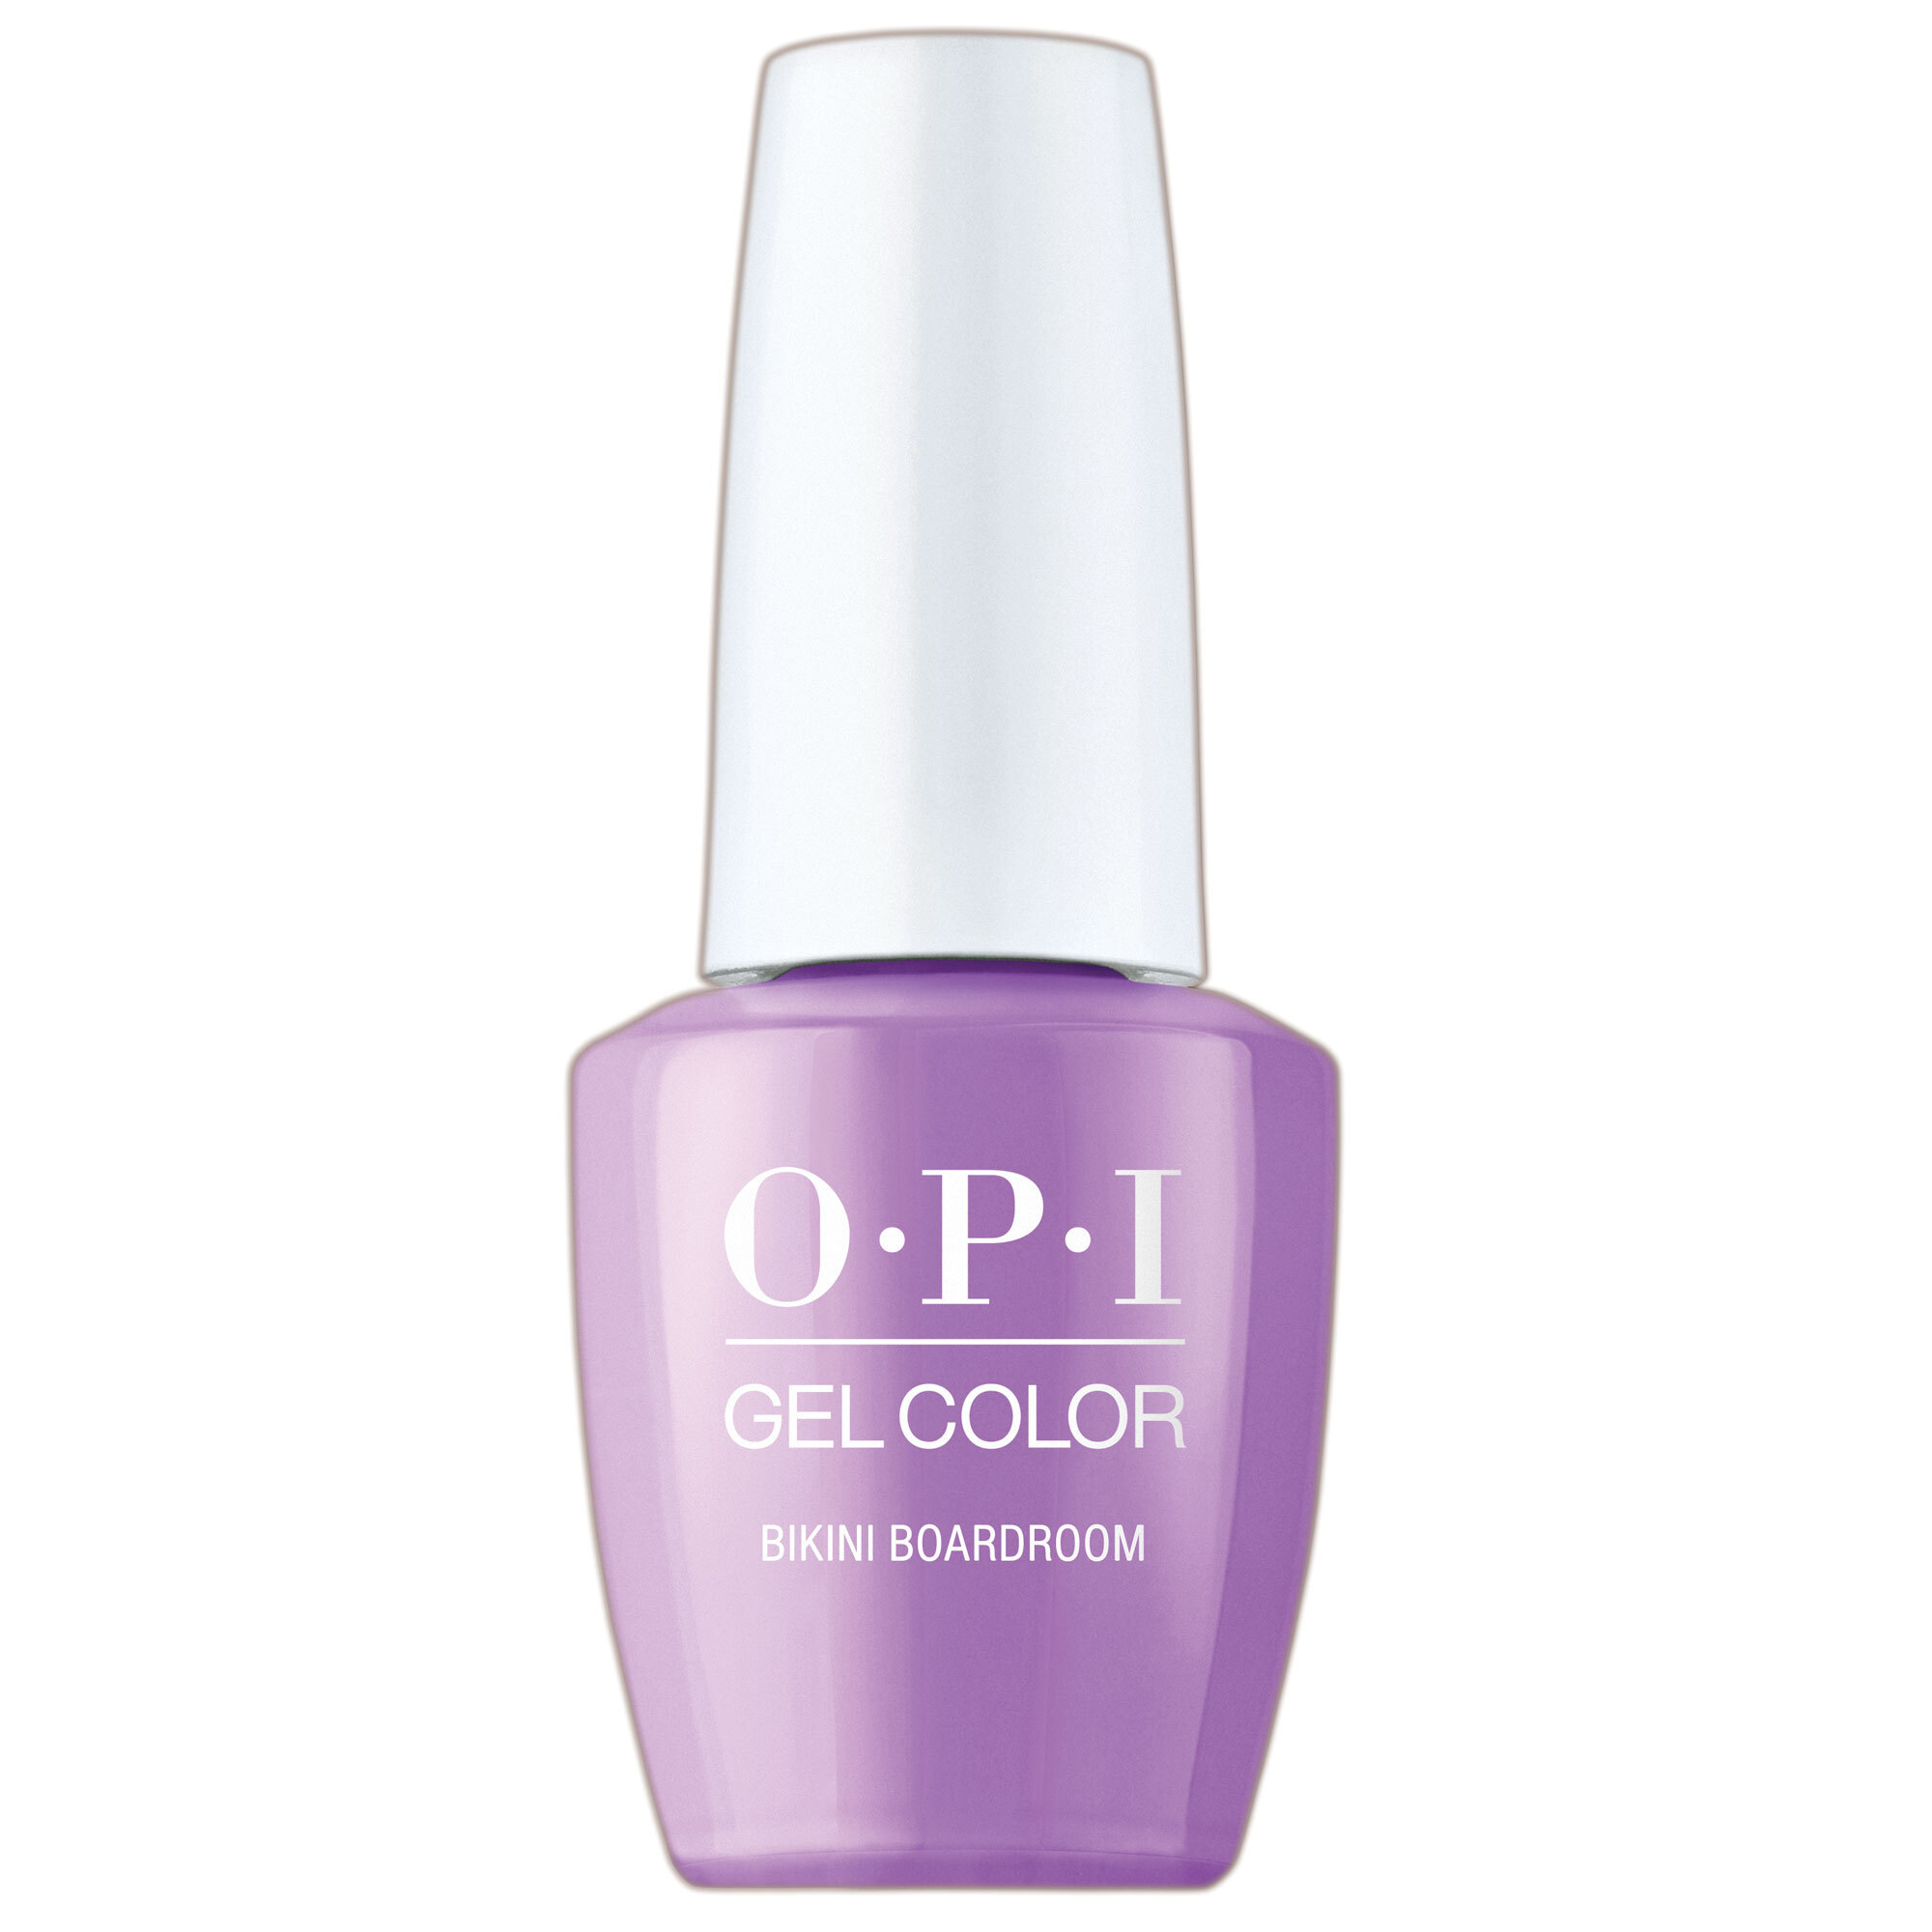 OPI Gel Color 360 - GelColor Bikini Boardroom